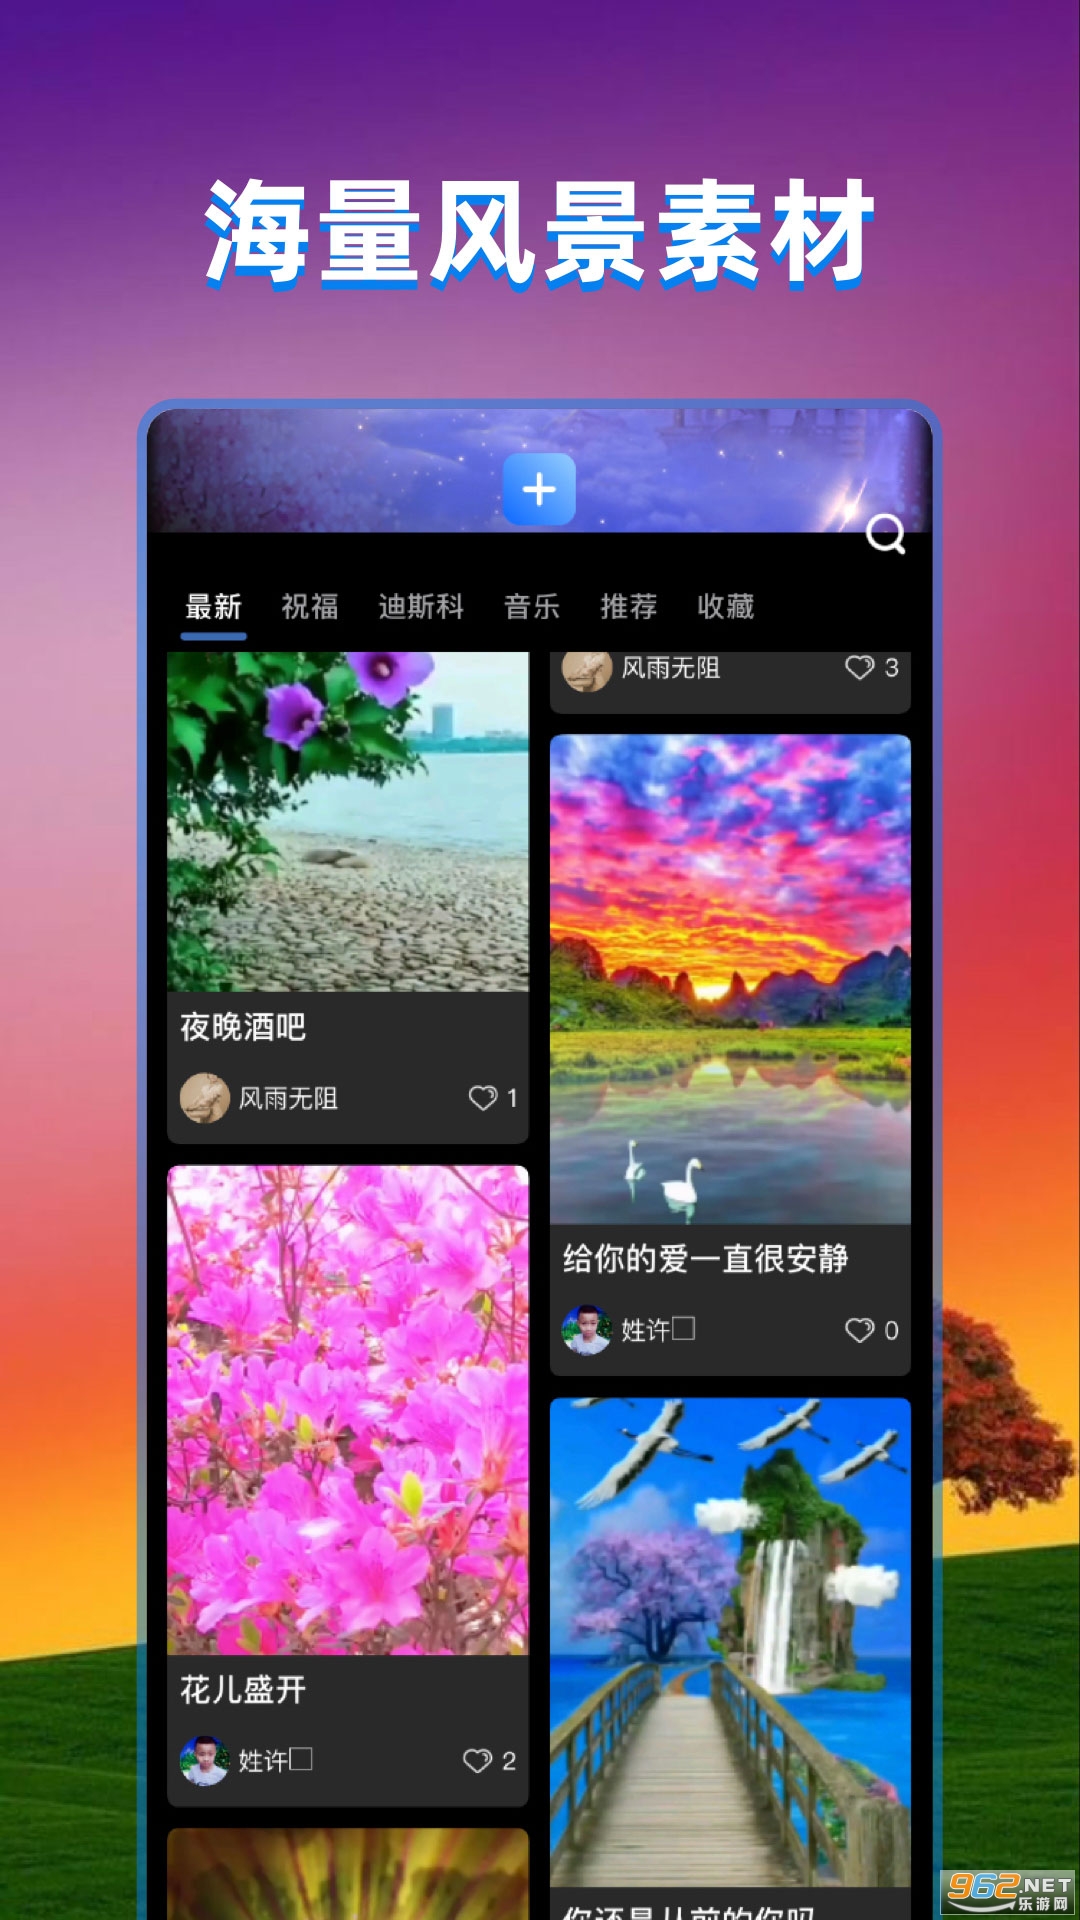 飞闪app v5.2.0 安卓版